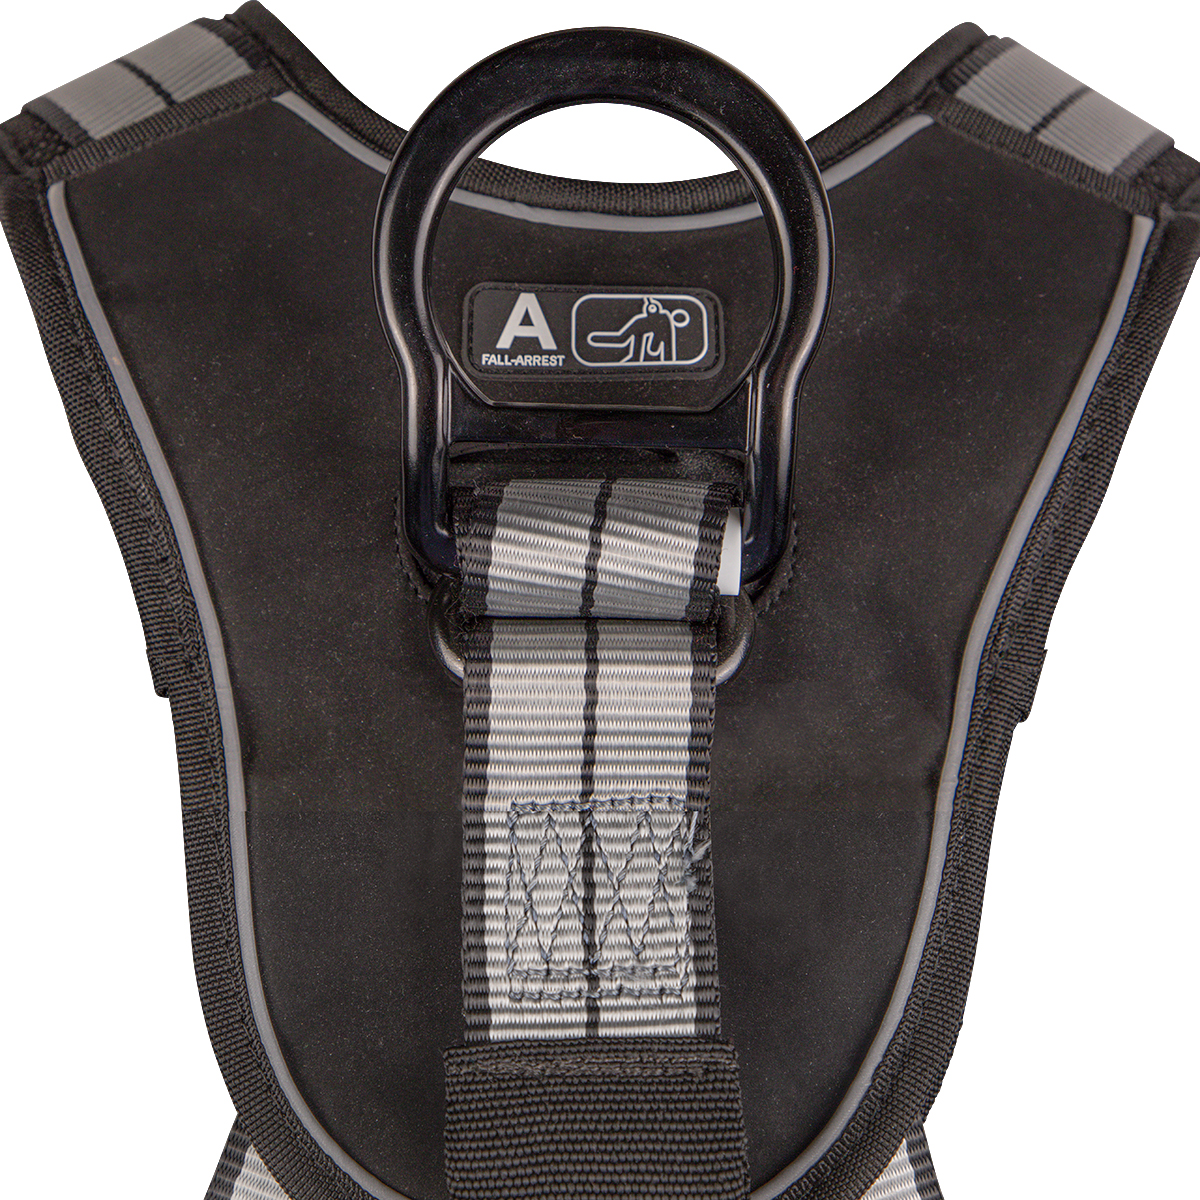 Safewaze PRO + Slate Full Body Harness from Columbia Safety